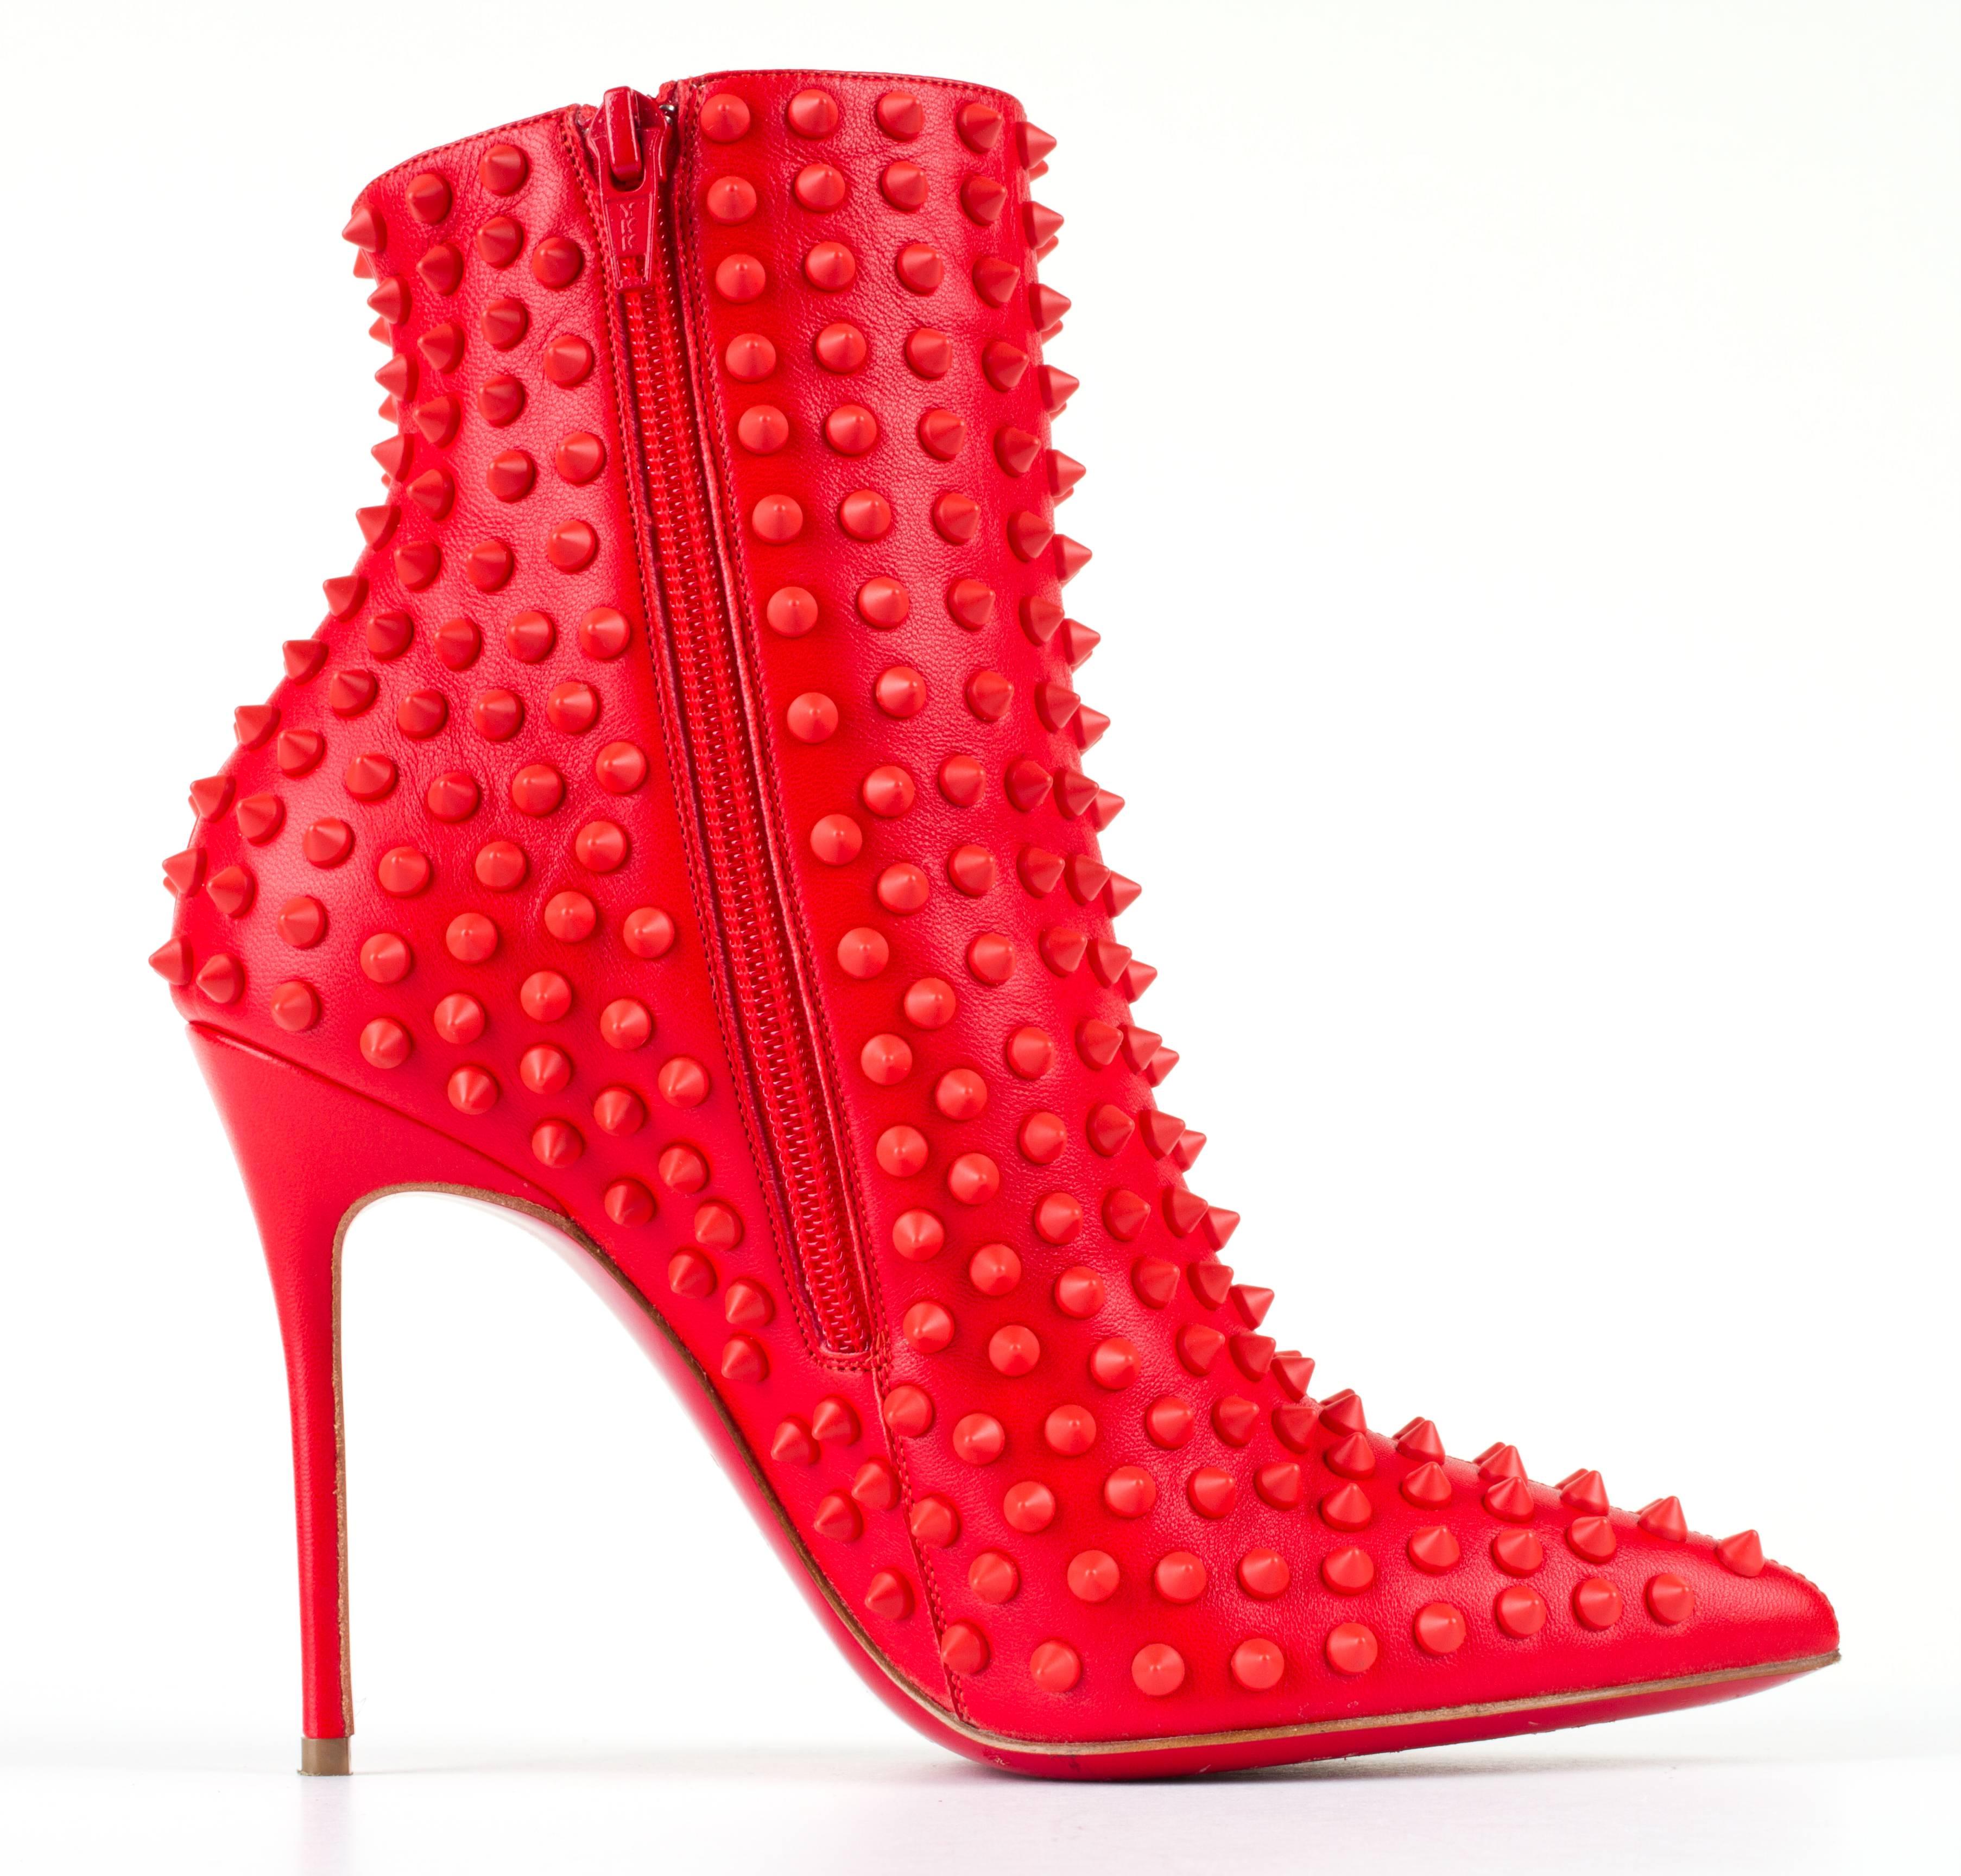 red christian louboutin heels